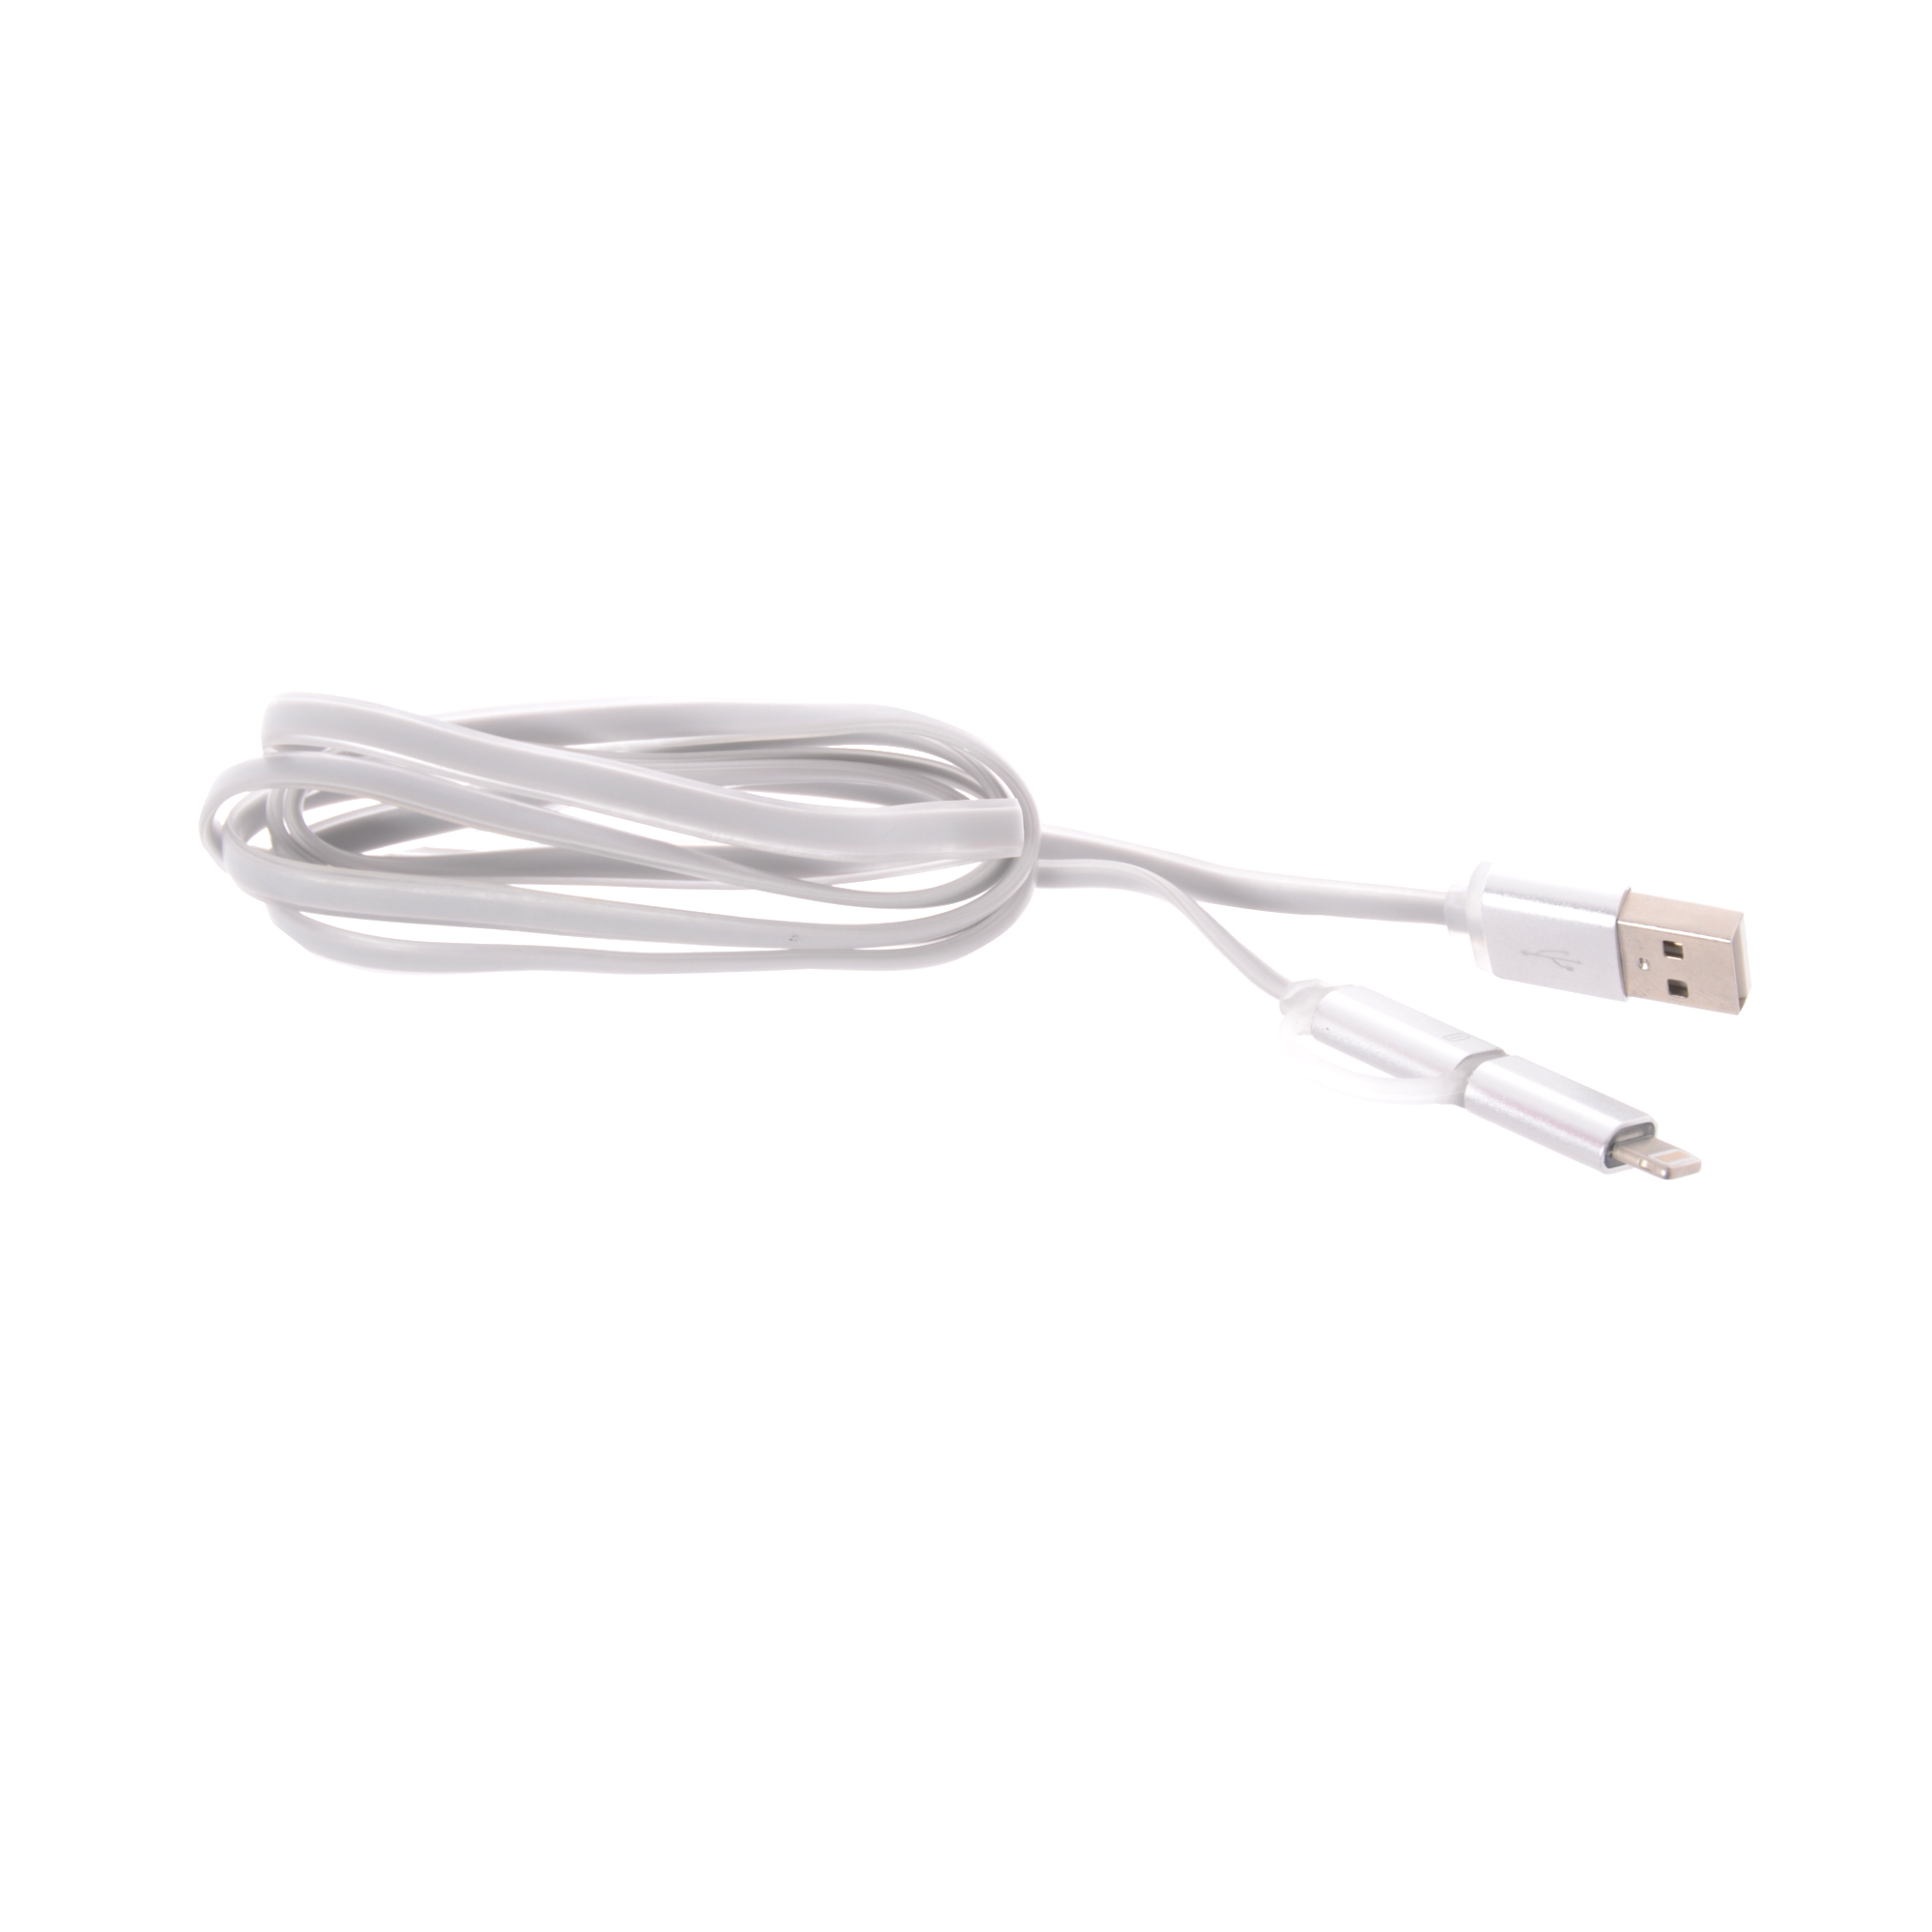 Кабель 2 выхода Lightning 8-pin - Micro USB Hoco UPL08 серебро